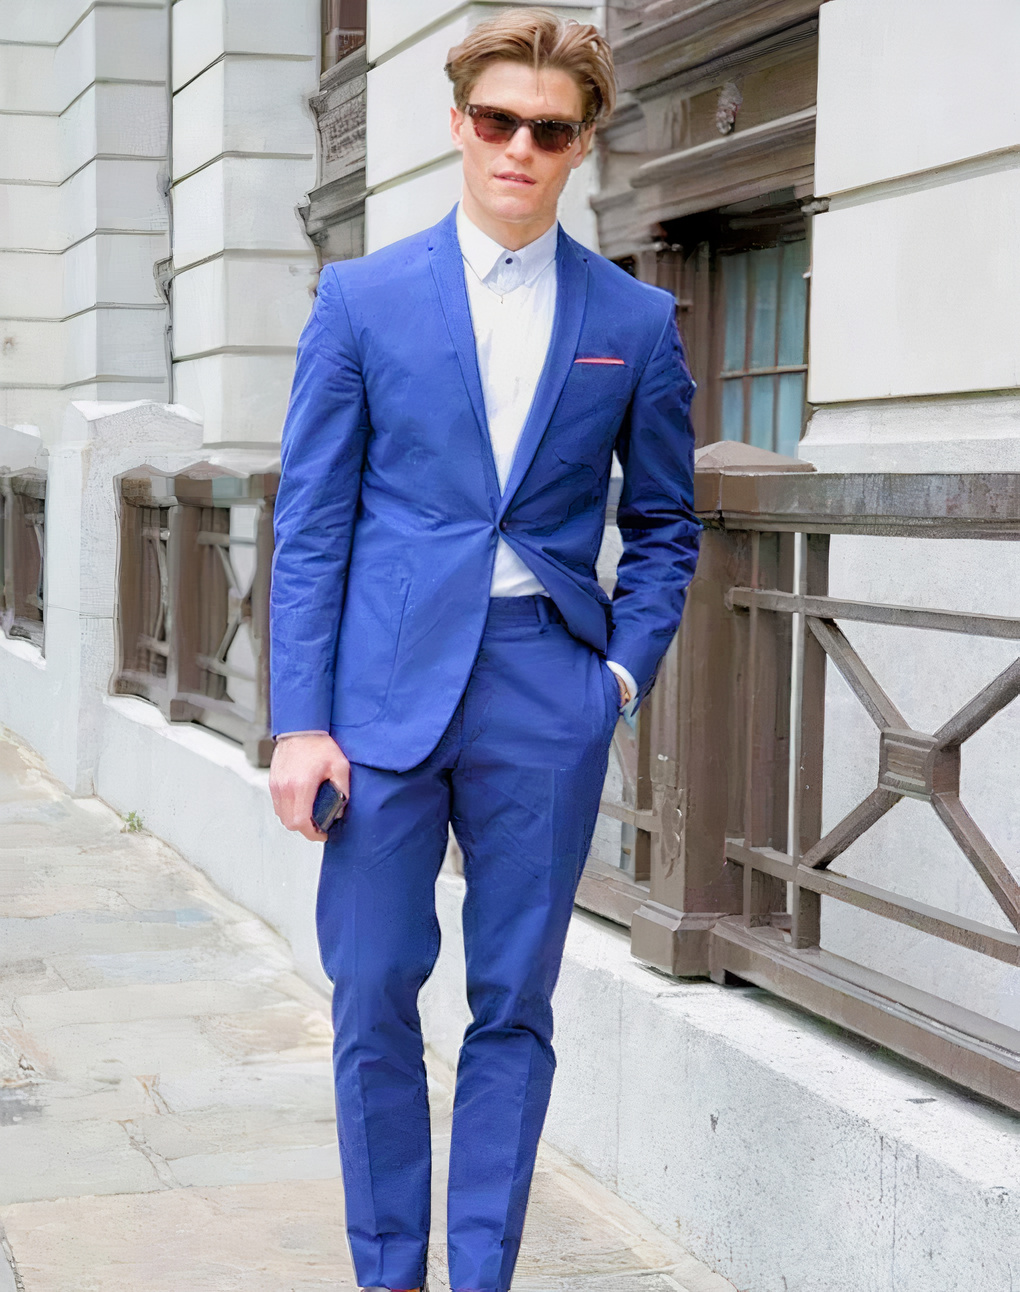 Blue suit and white shirt color combination